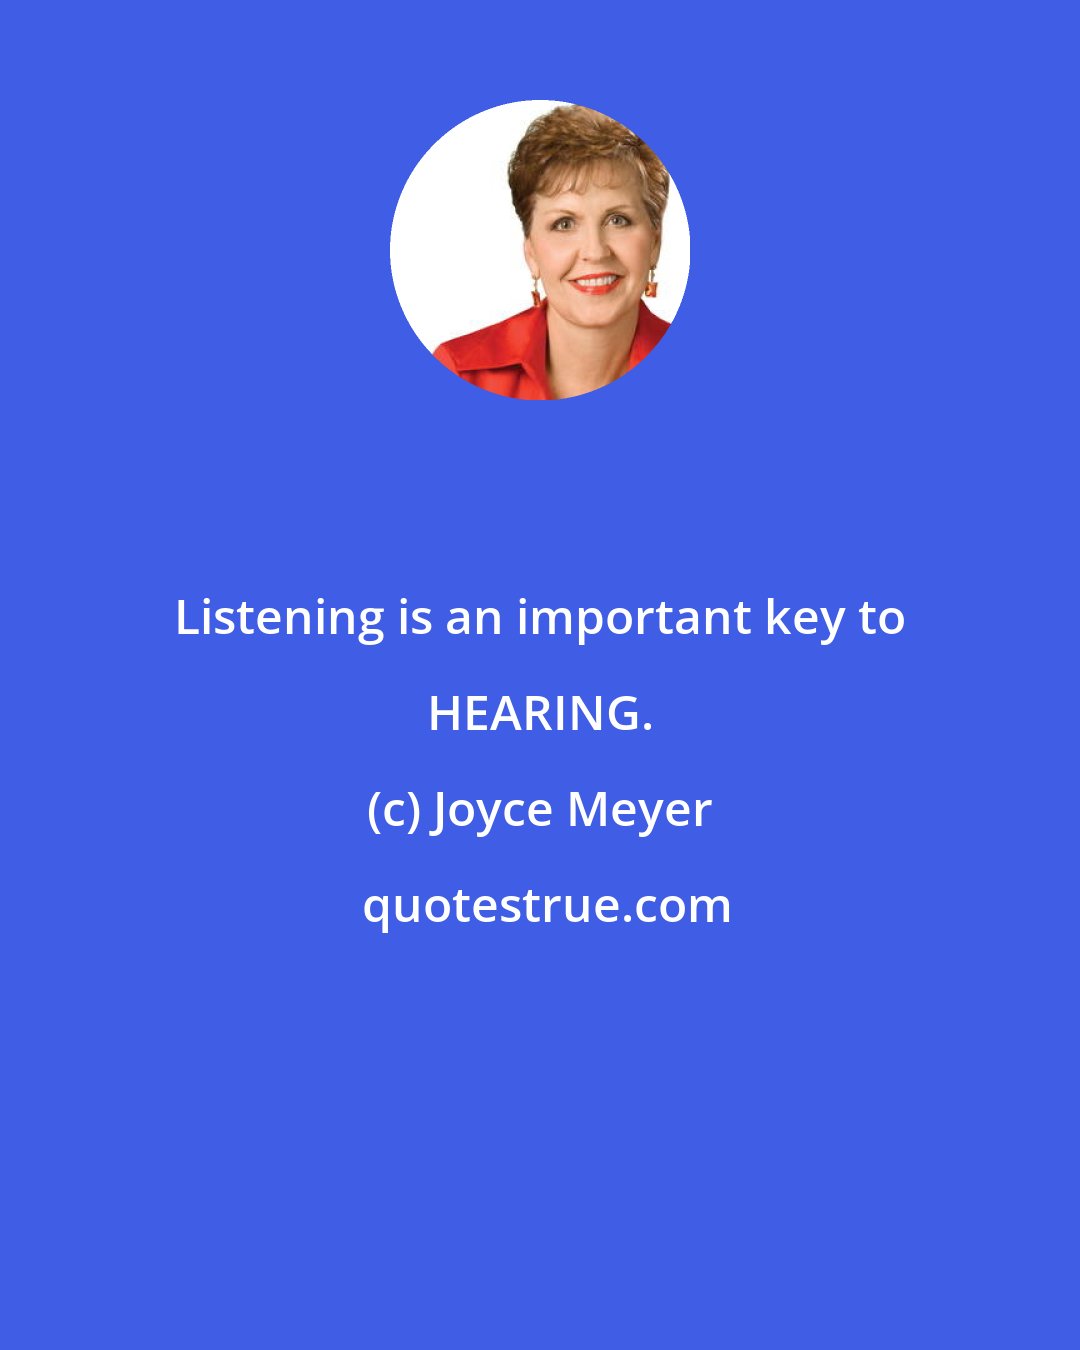 Joyce Meyer: Listening is an important key to HEARING.